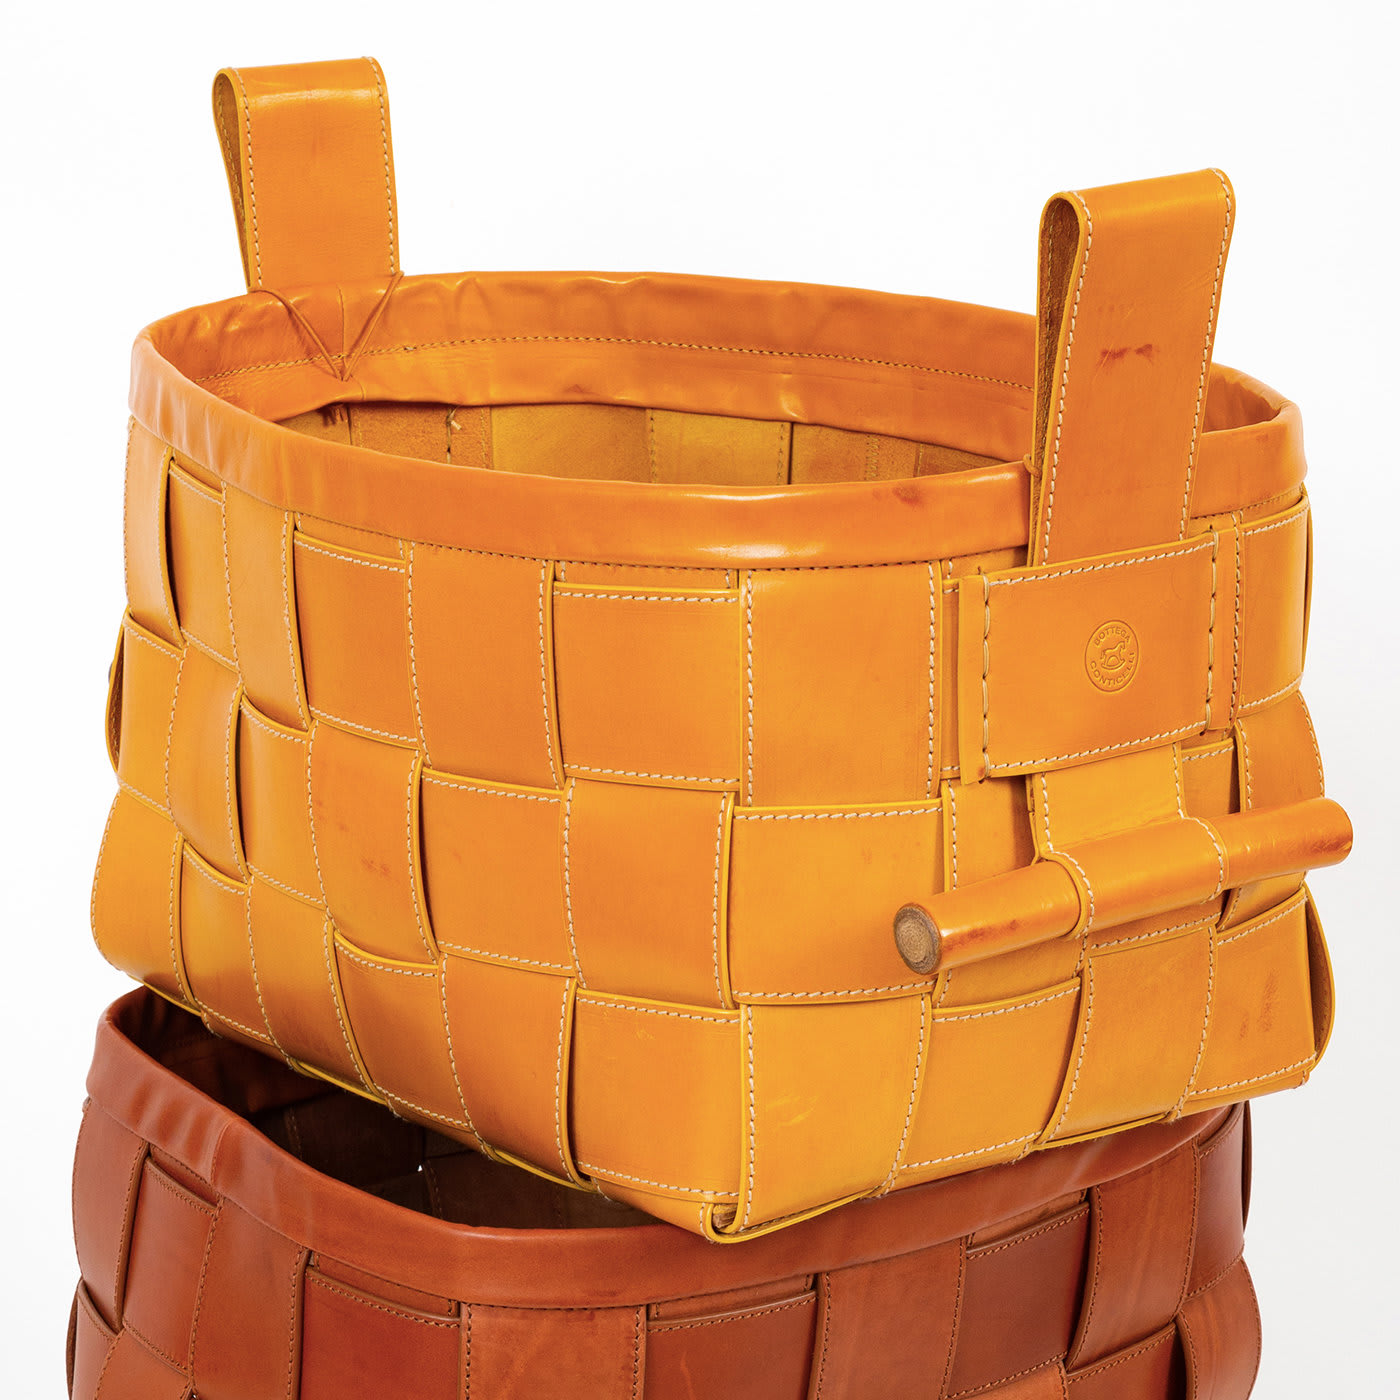 Woven Leather Basket Mustard Yellow - Bottega Conticelli